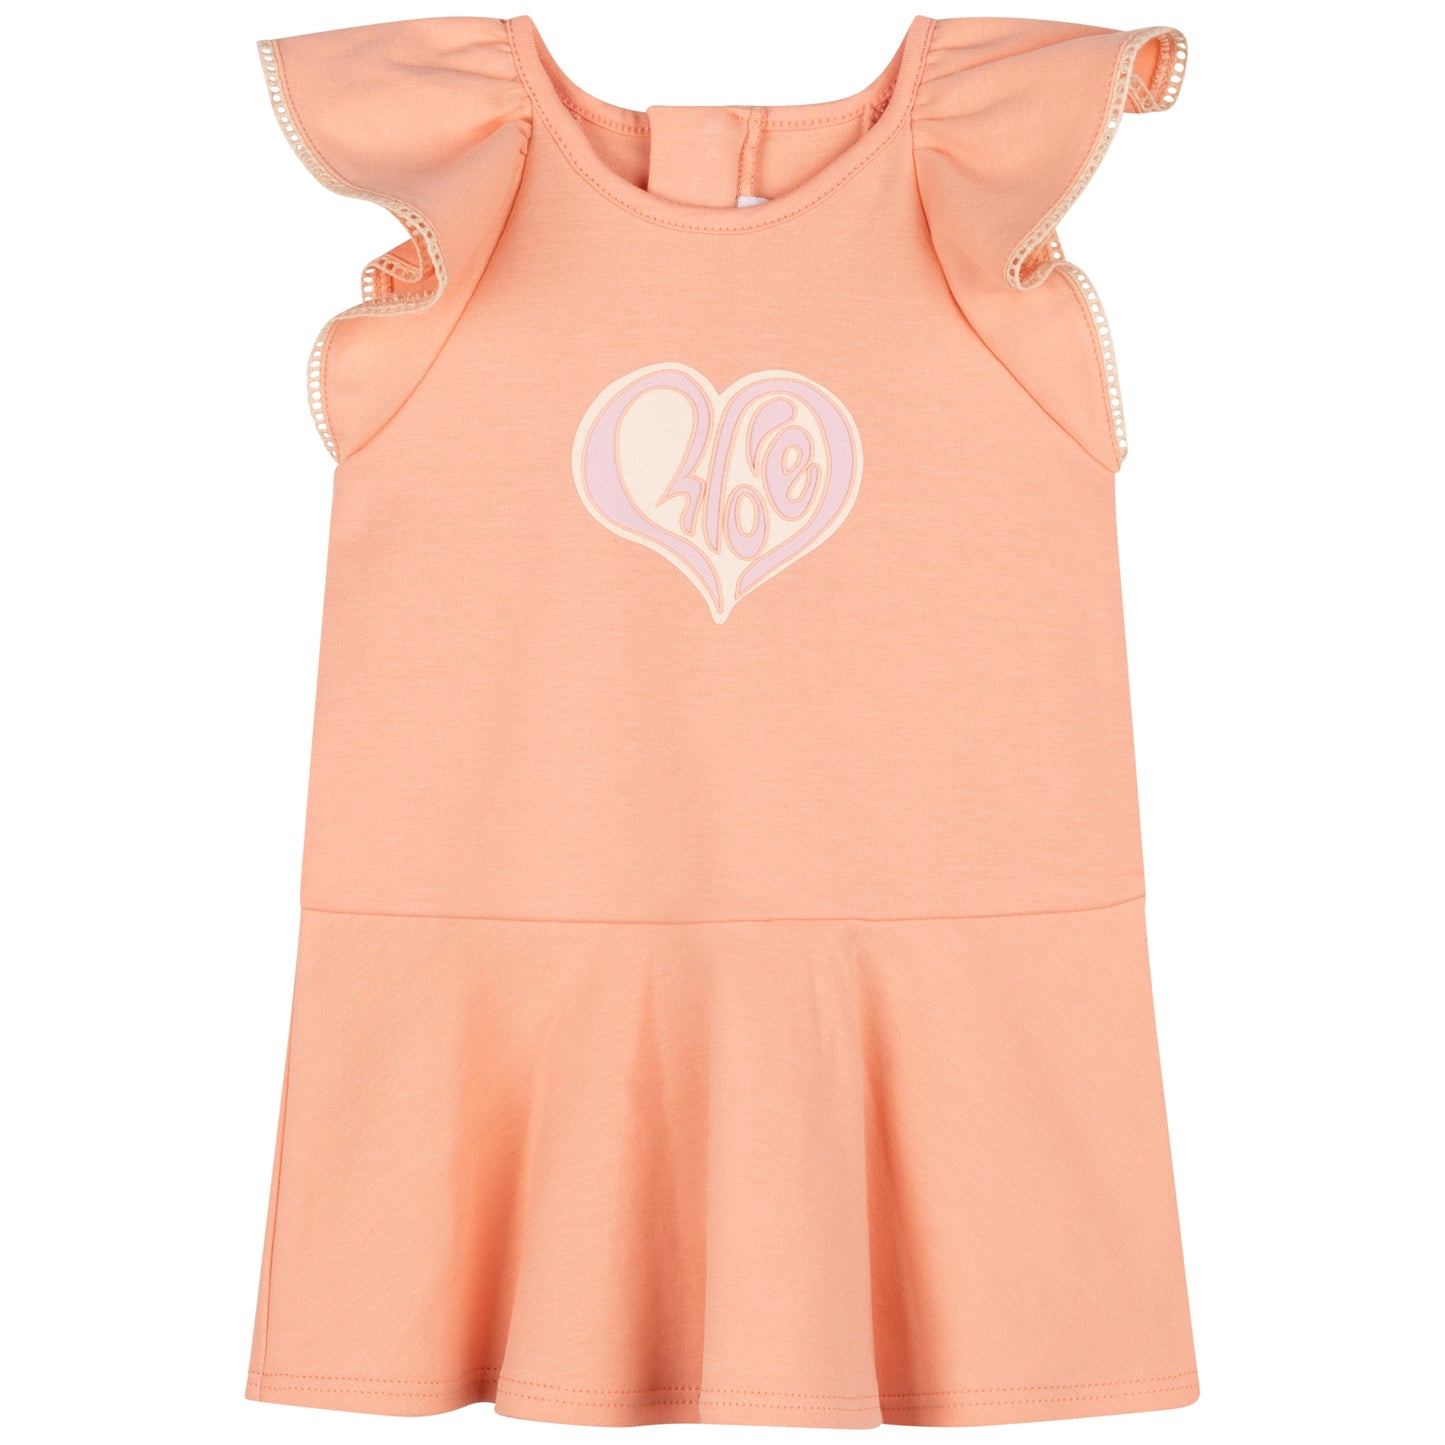 Chloe Short Sleeve Heart Dress